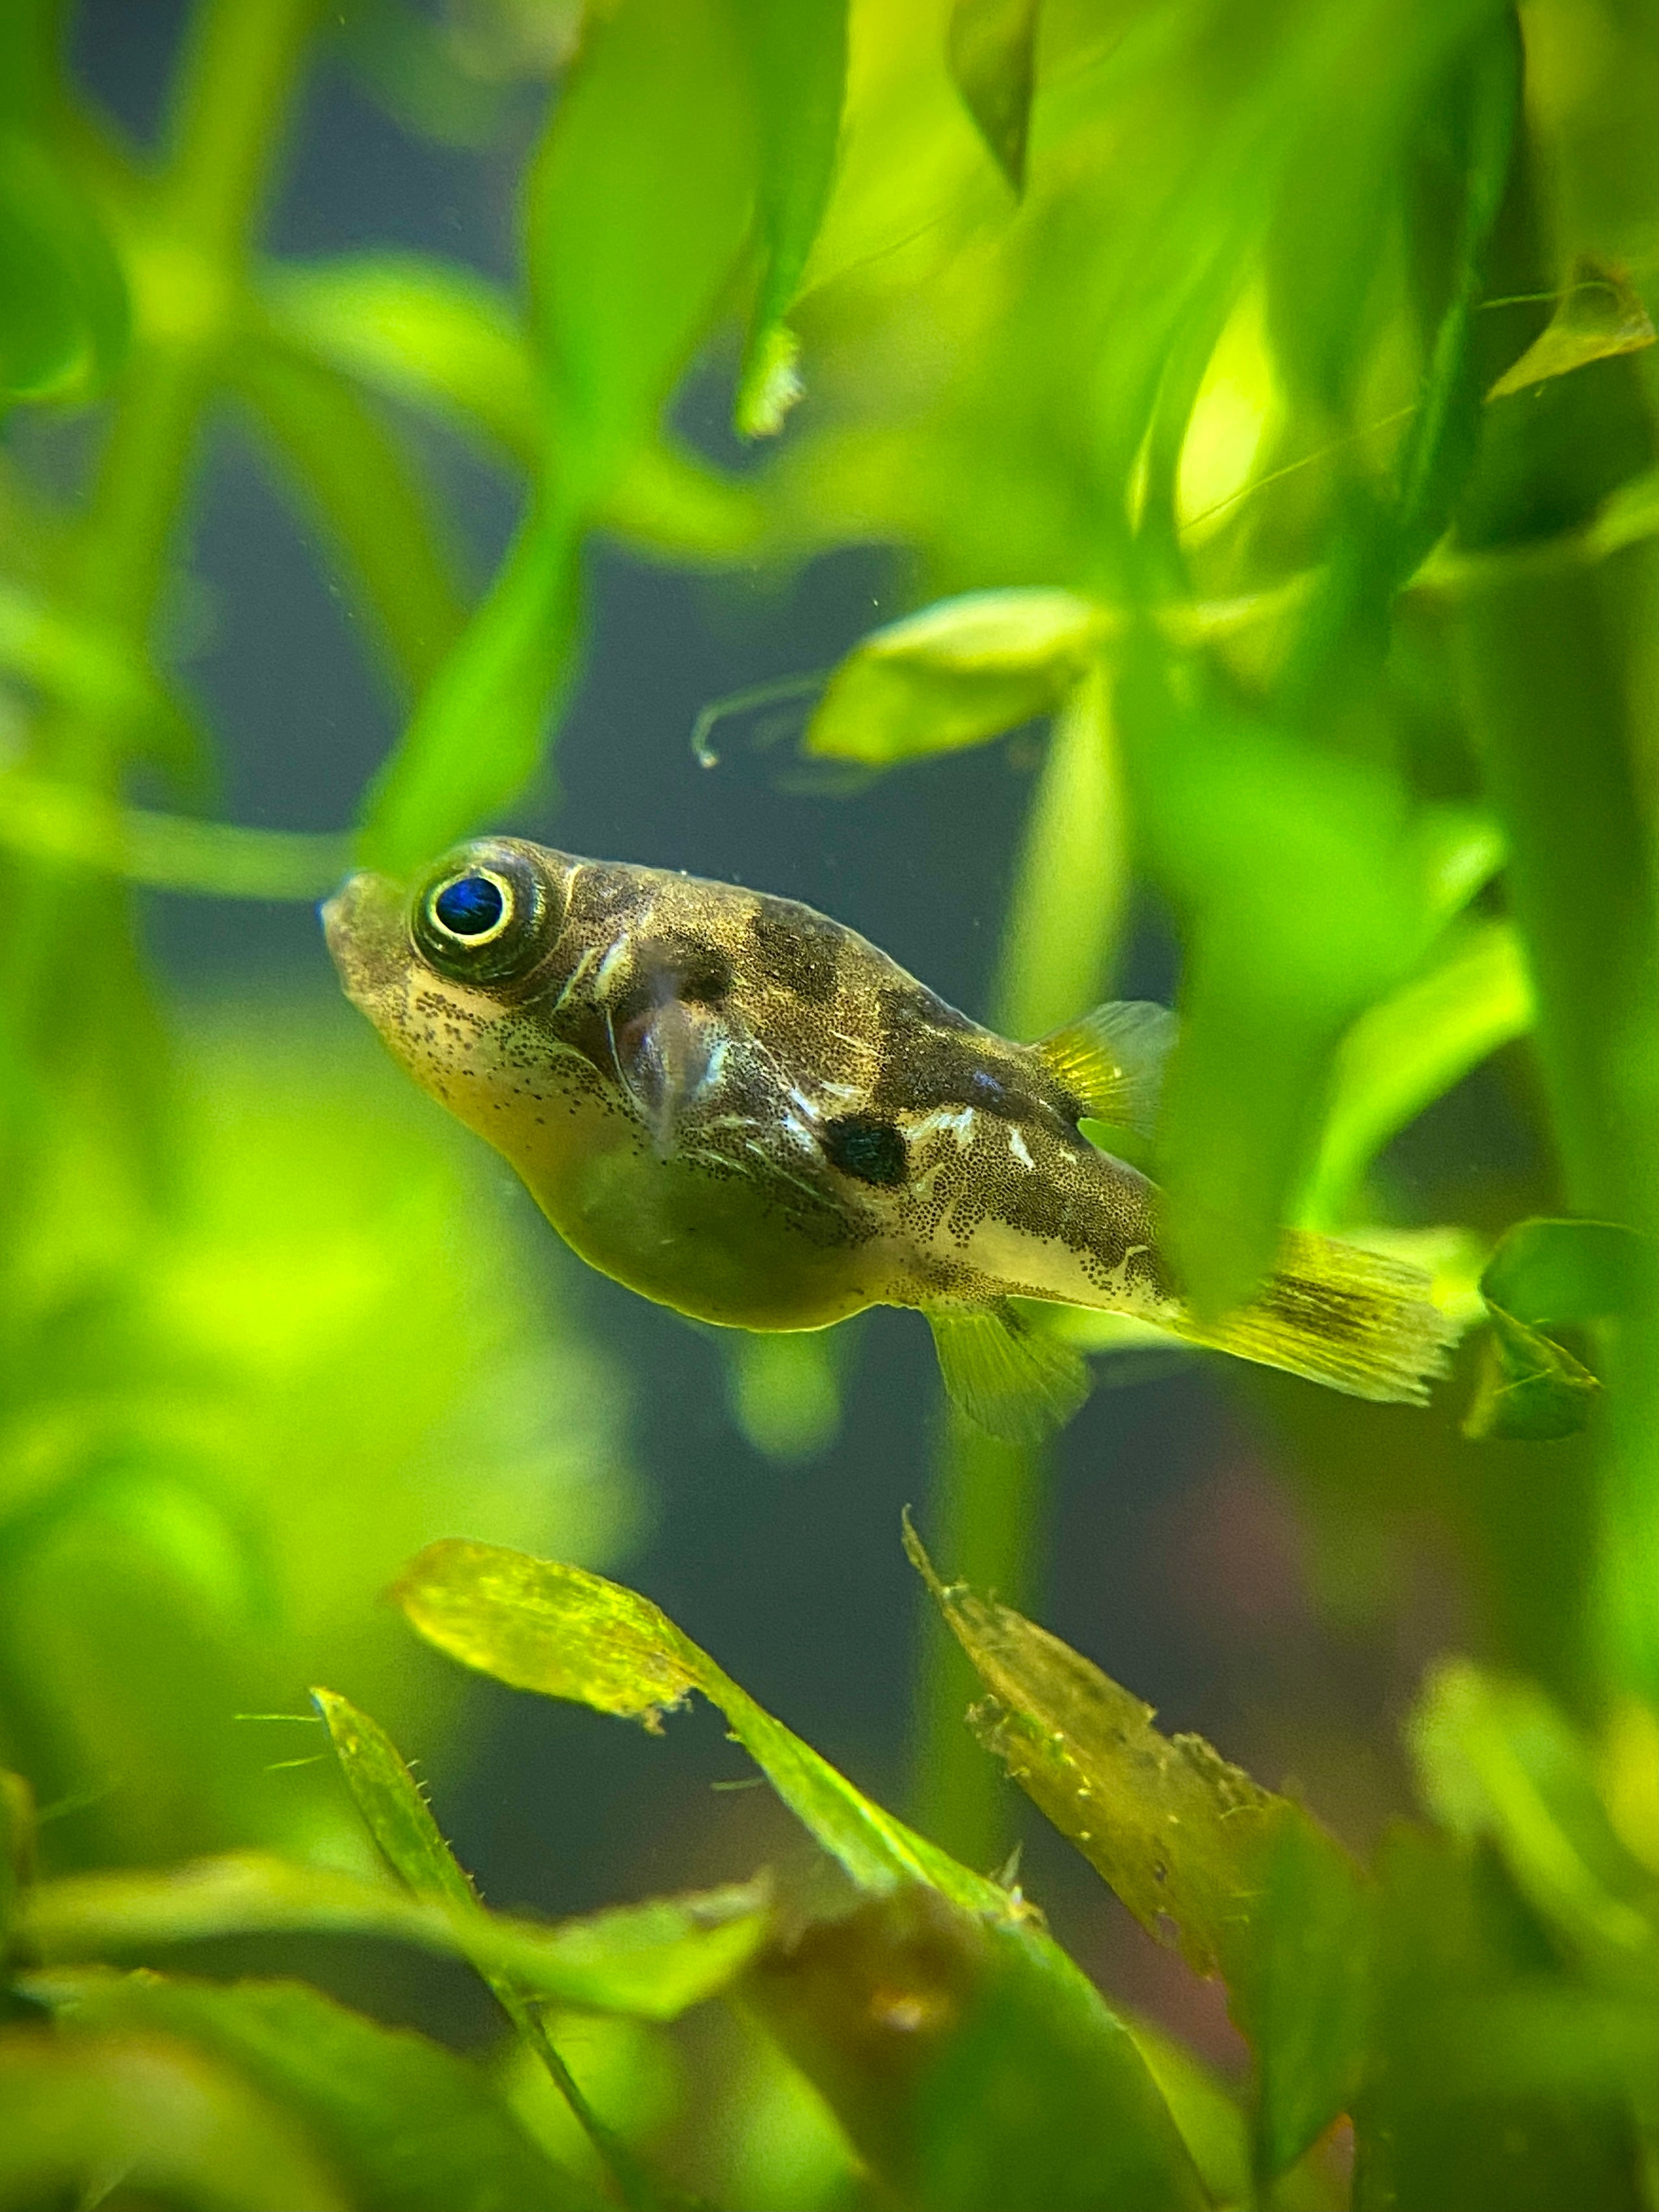 Indian Dwarf Pea Puffer | Tank Breed | Splashy Fish | Live Tropical Freshwater Aquarium Fish Tank | Carinotetraodon travancoricus